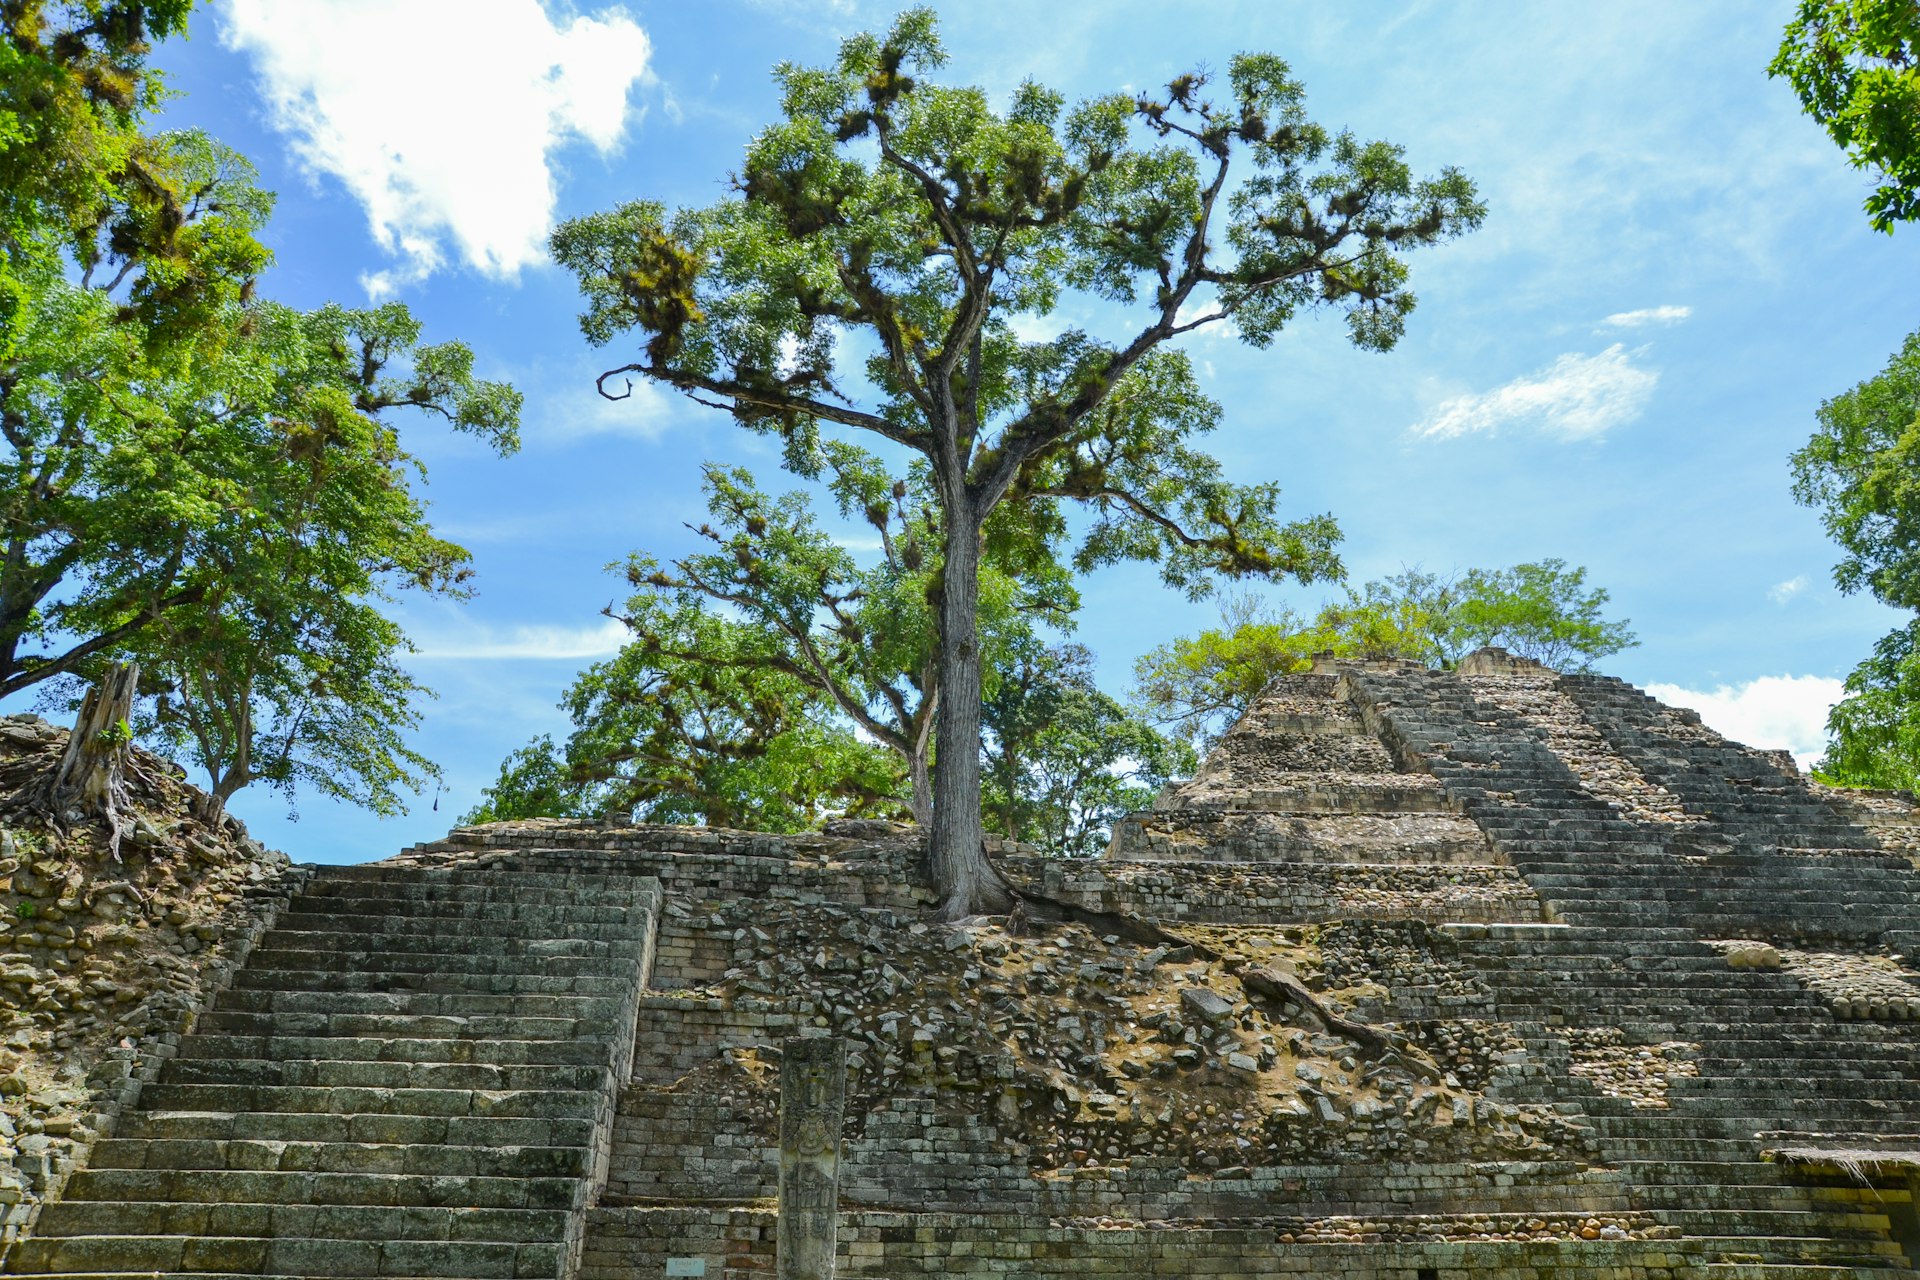 Trees growing up from a ruined pyramid at Copan, Honduras